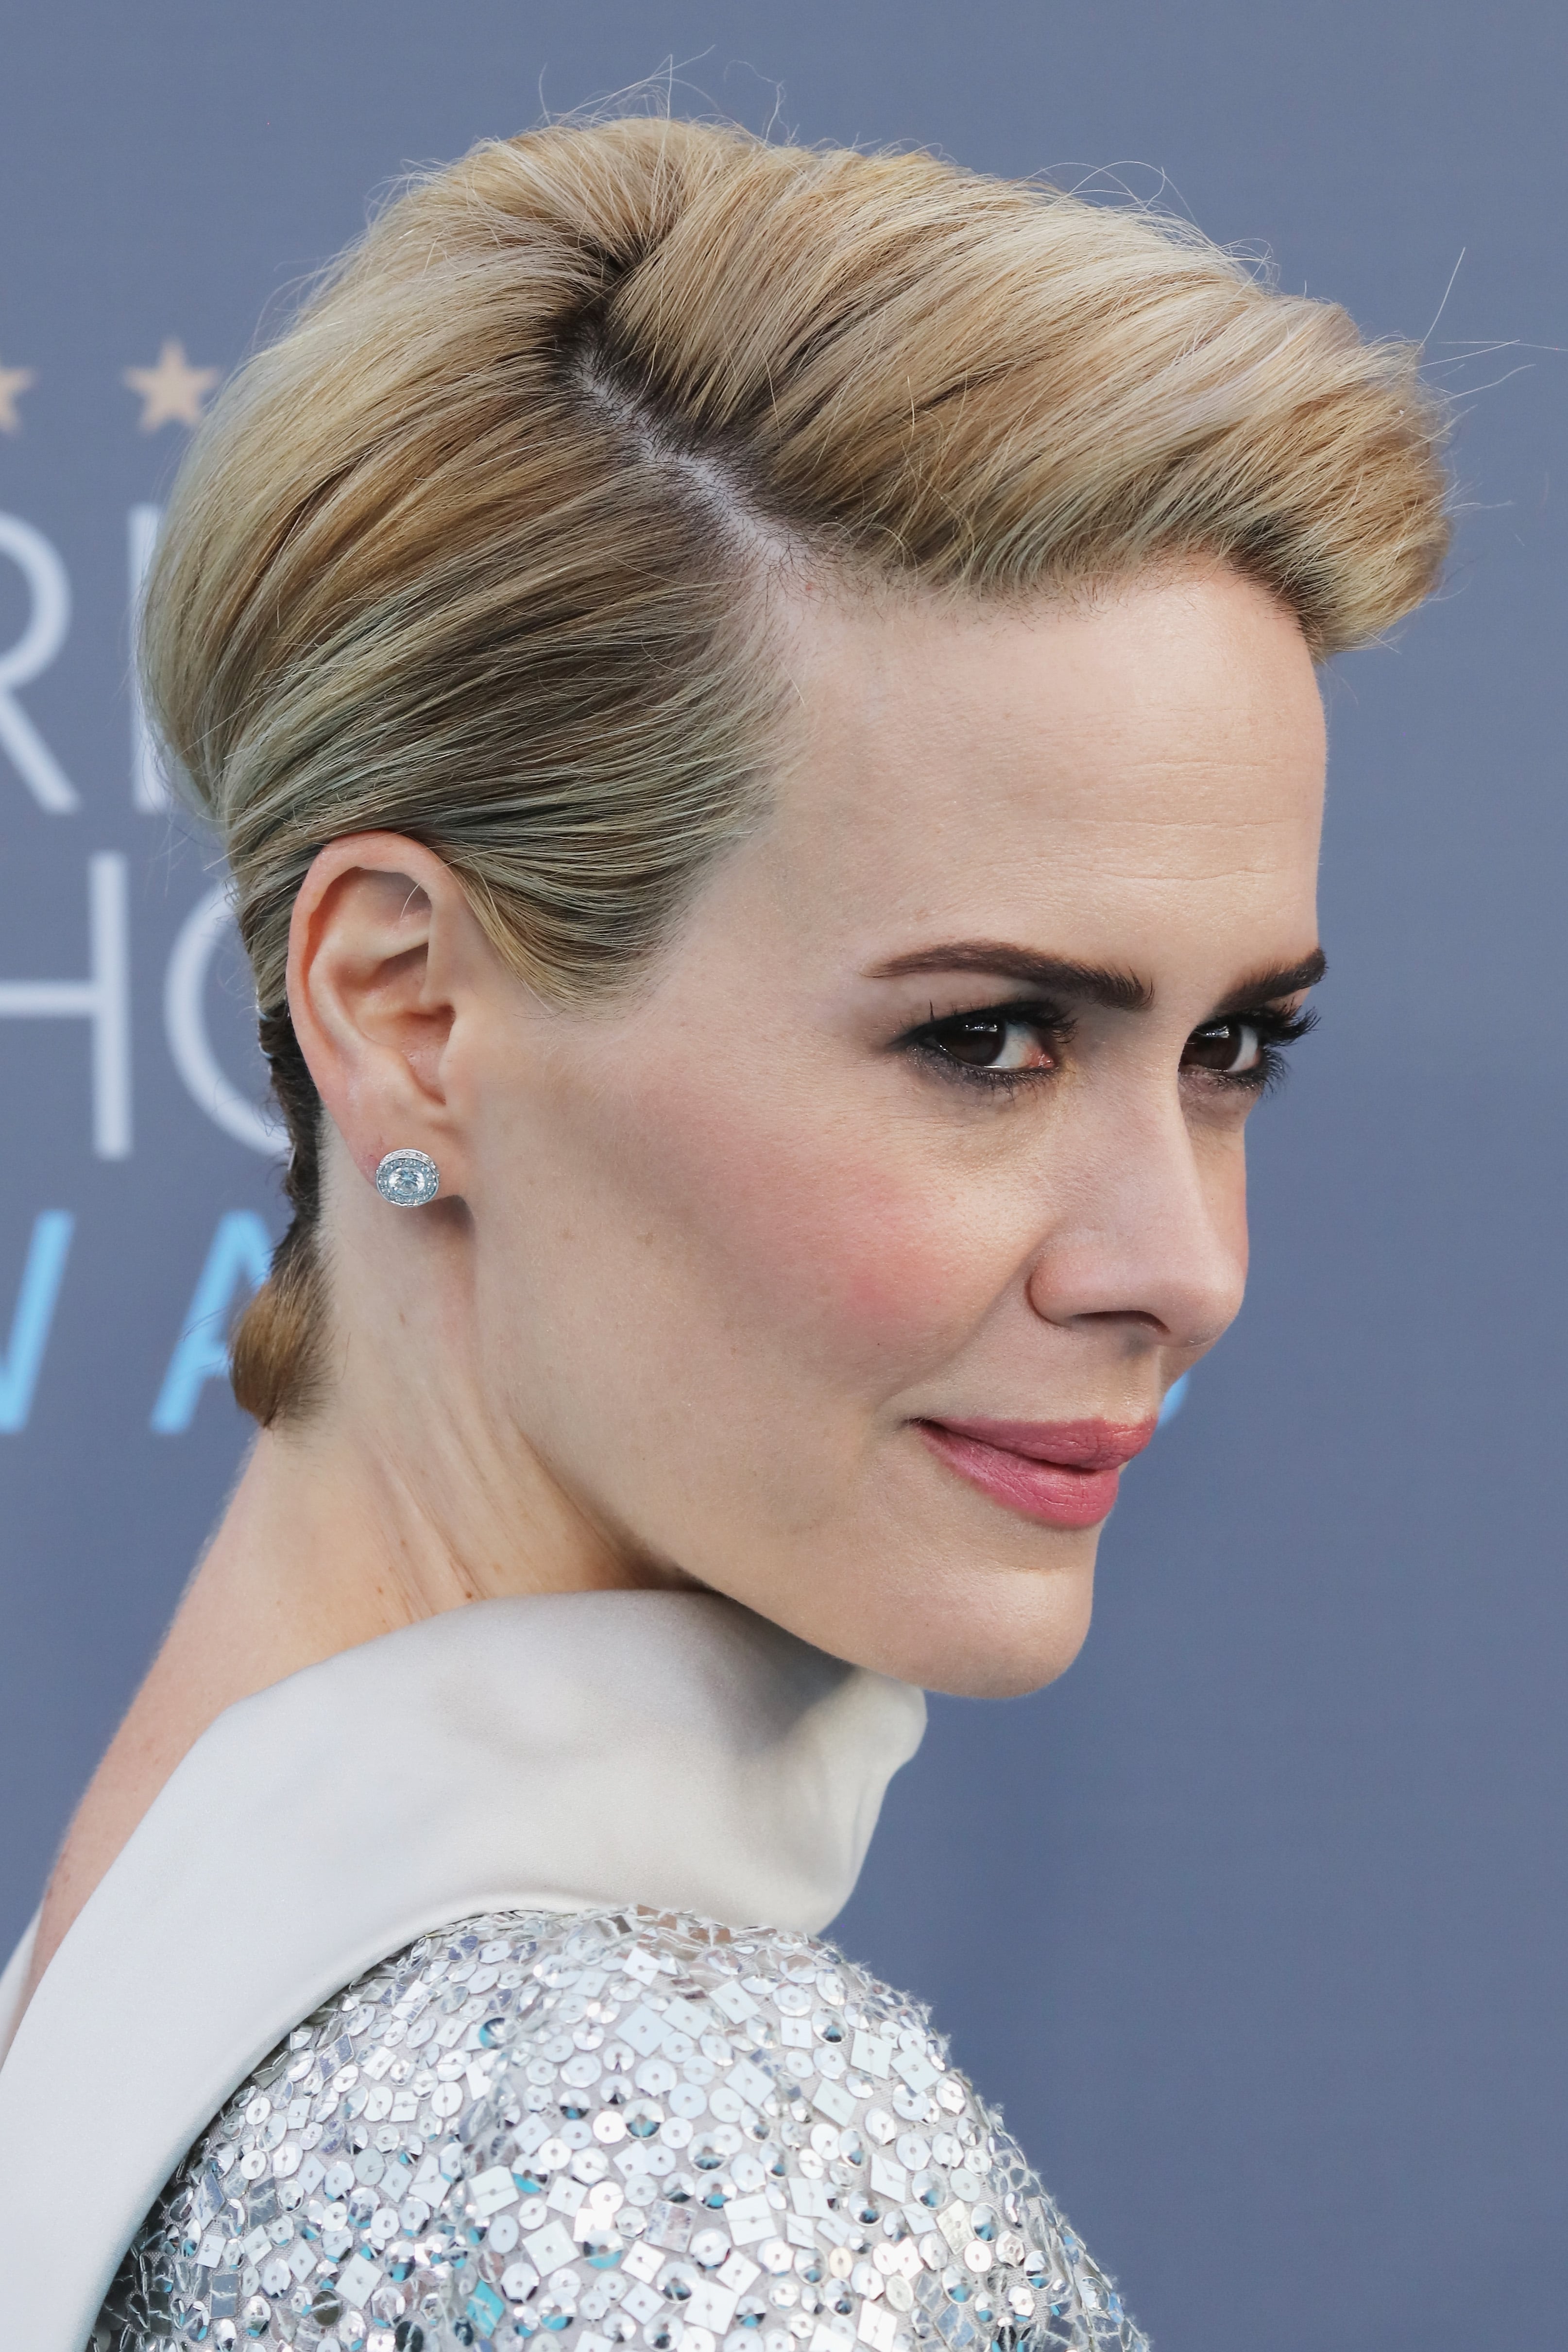 Slicked-back hair trend - celebrity hair at Critics' Choice Awards 2016